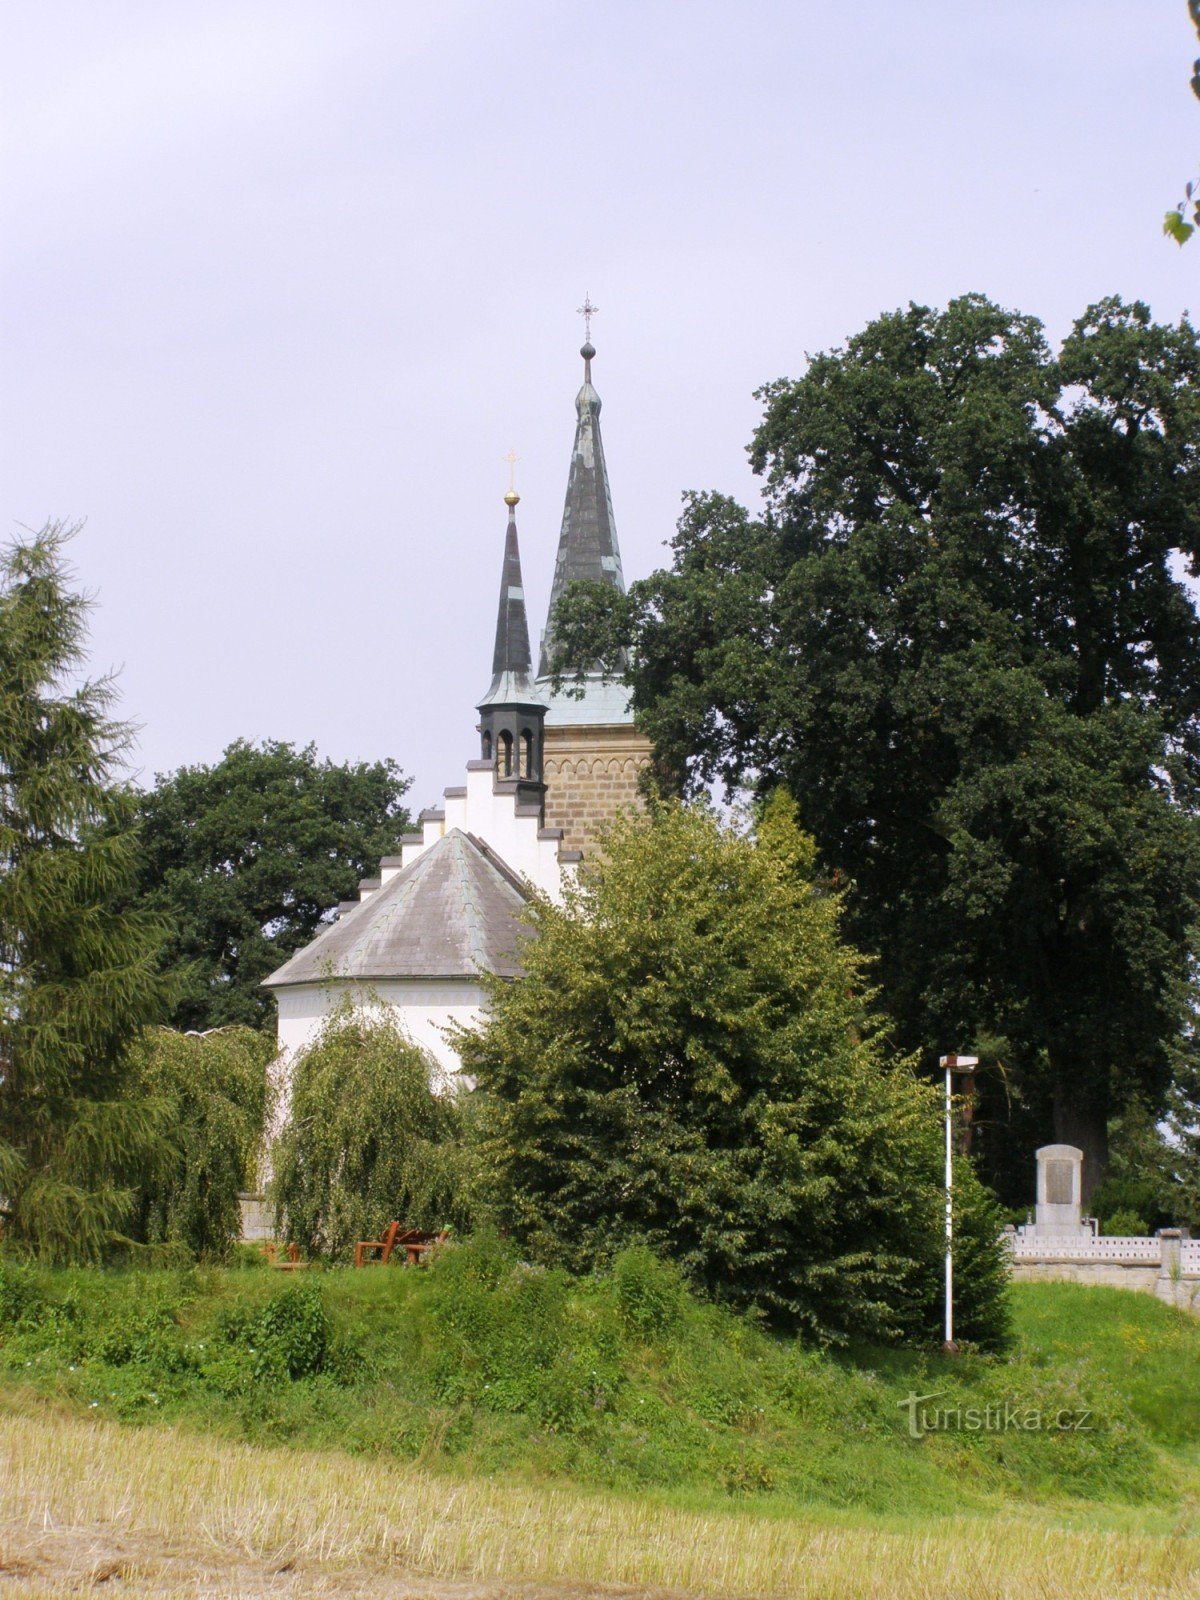 Karlovice - Biserica Sf. George